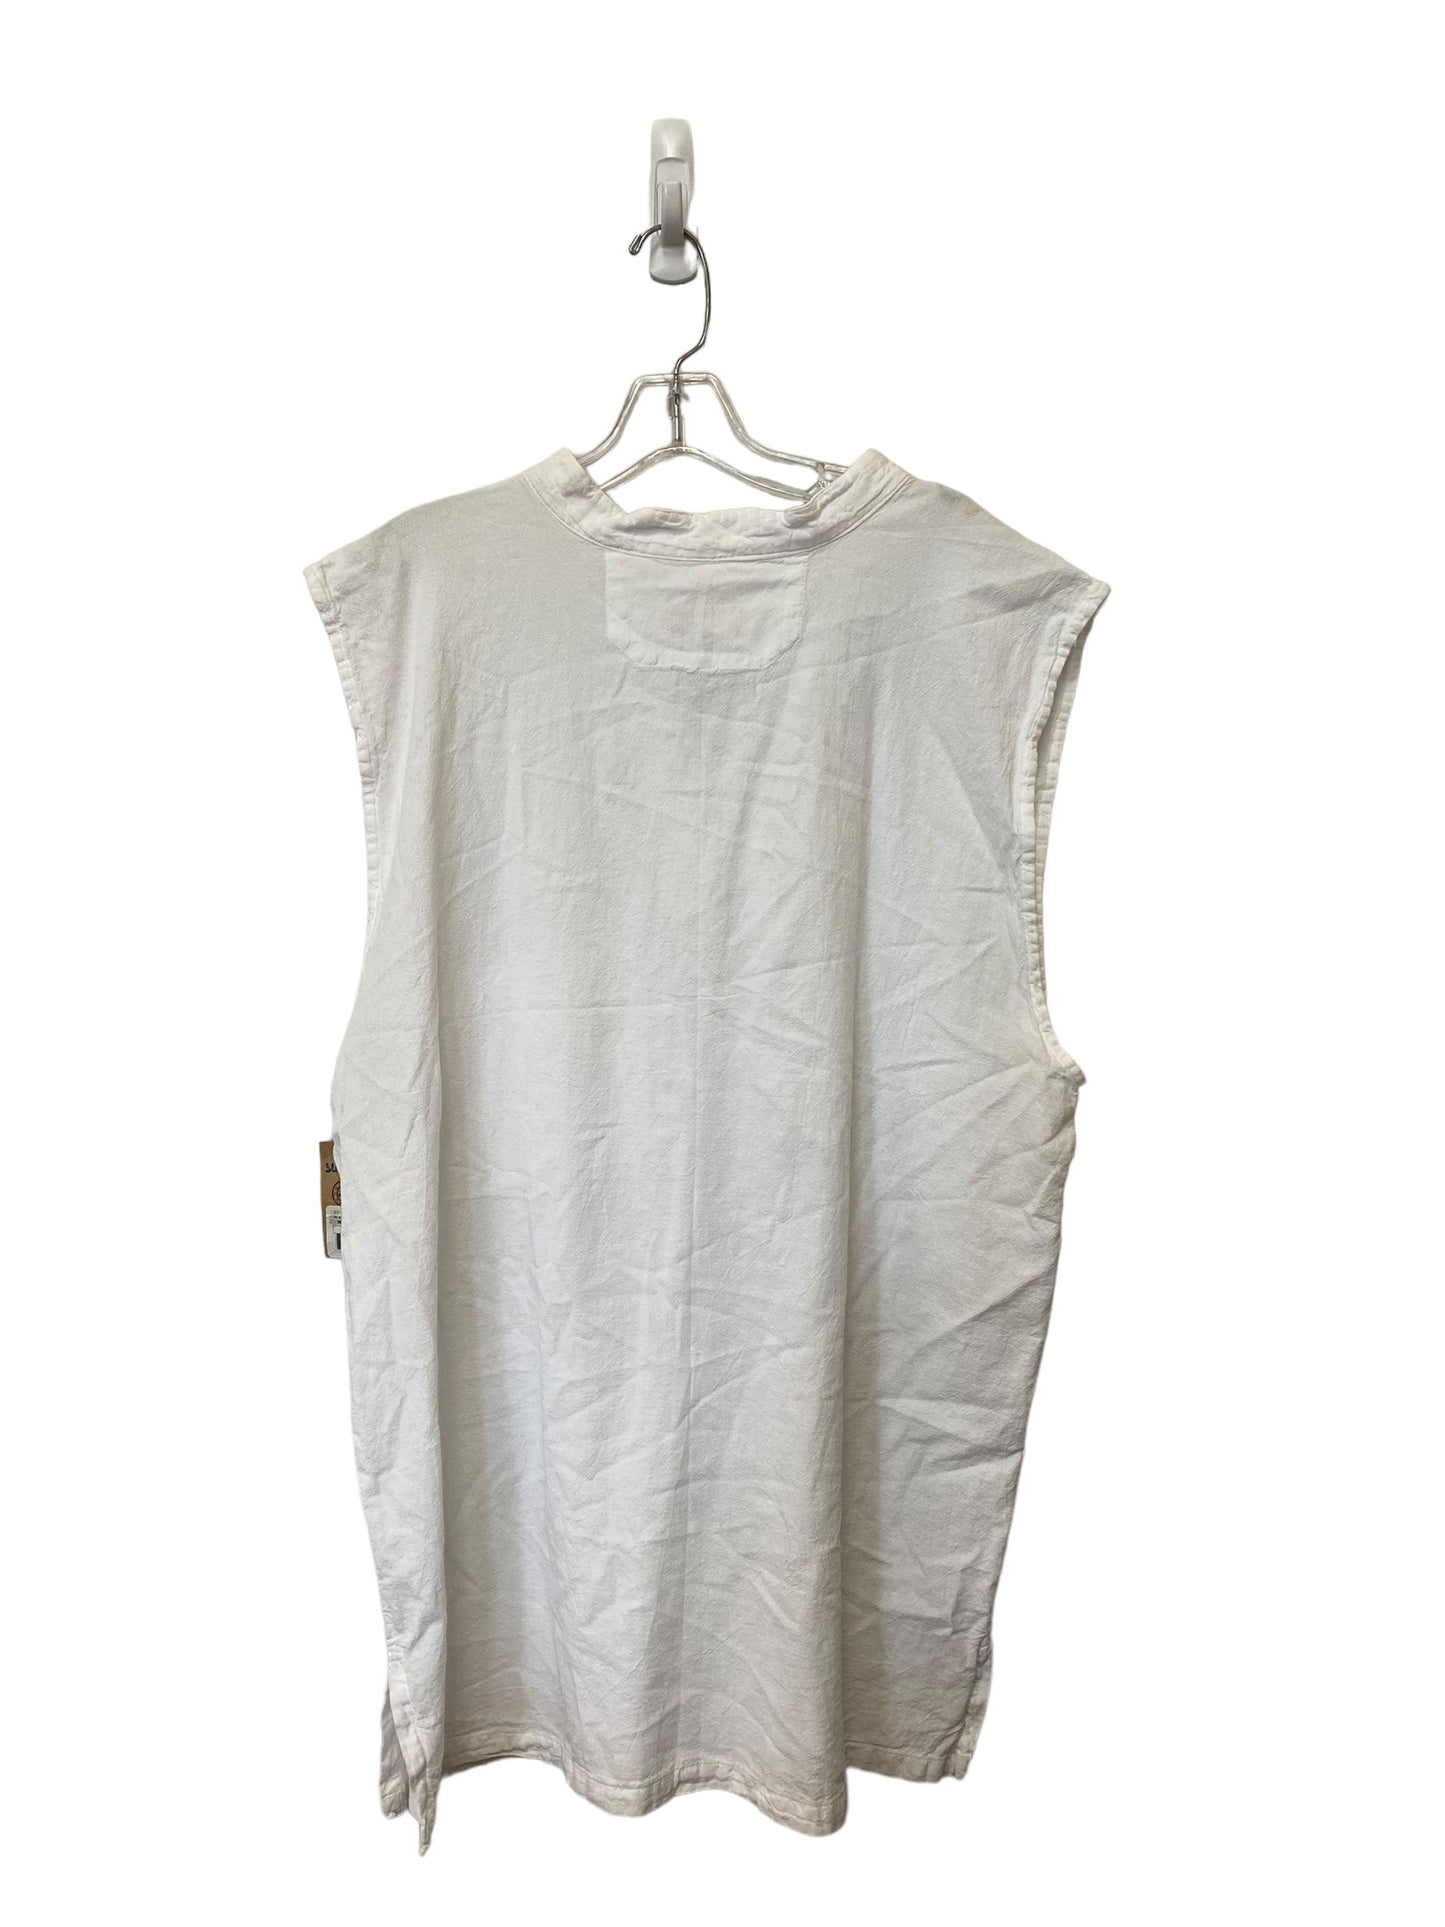 White Top Sleeveless Clothes Mentor, Size 2x